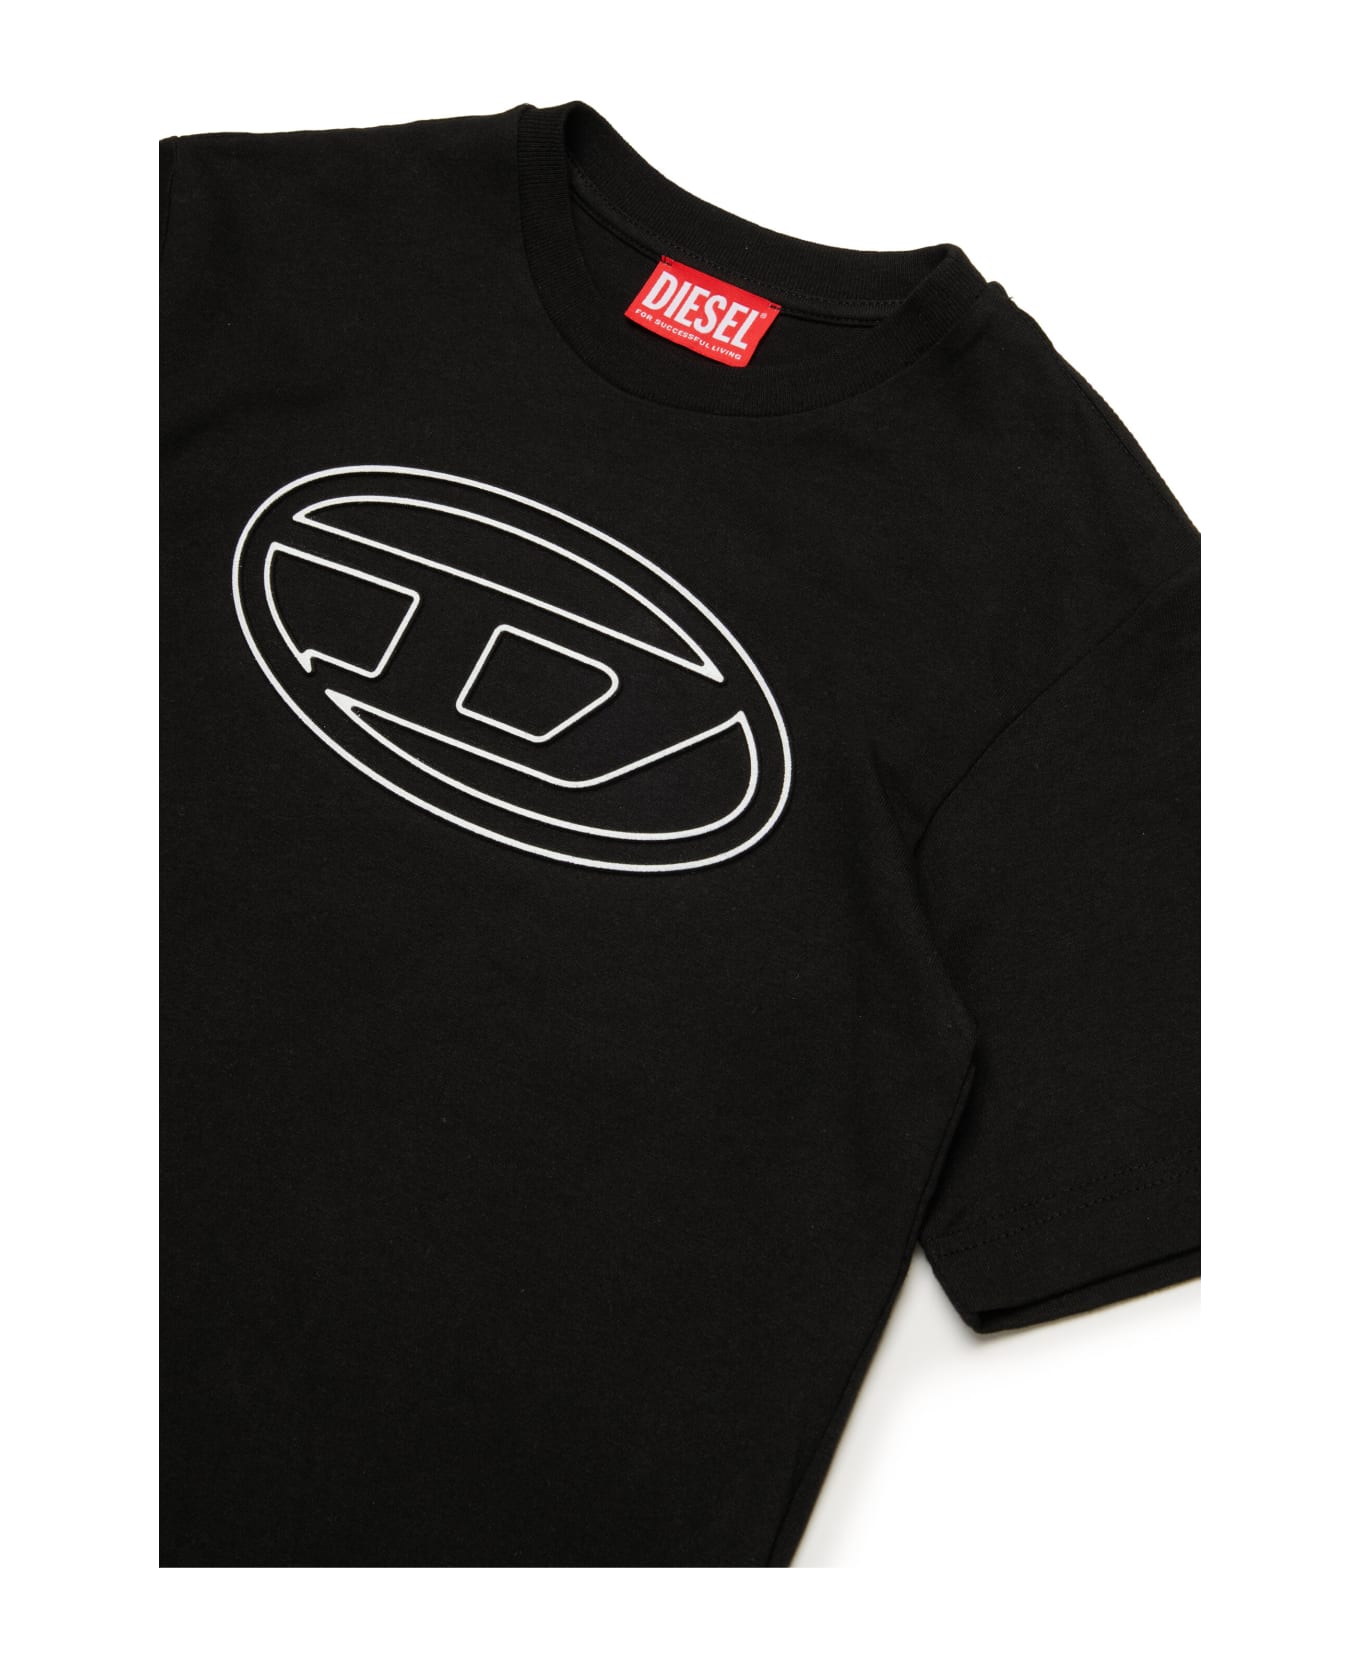 Diesel Tjustbigoval Over T-shirt Diesel Oval D Branded T-shirt